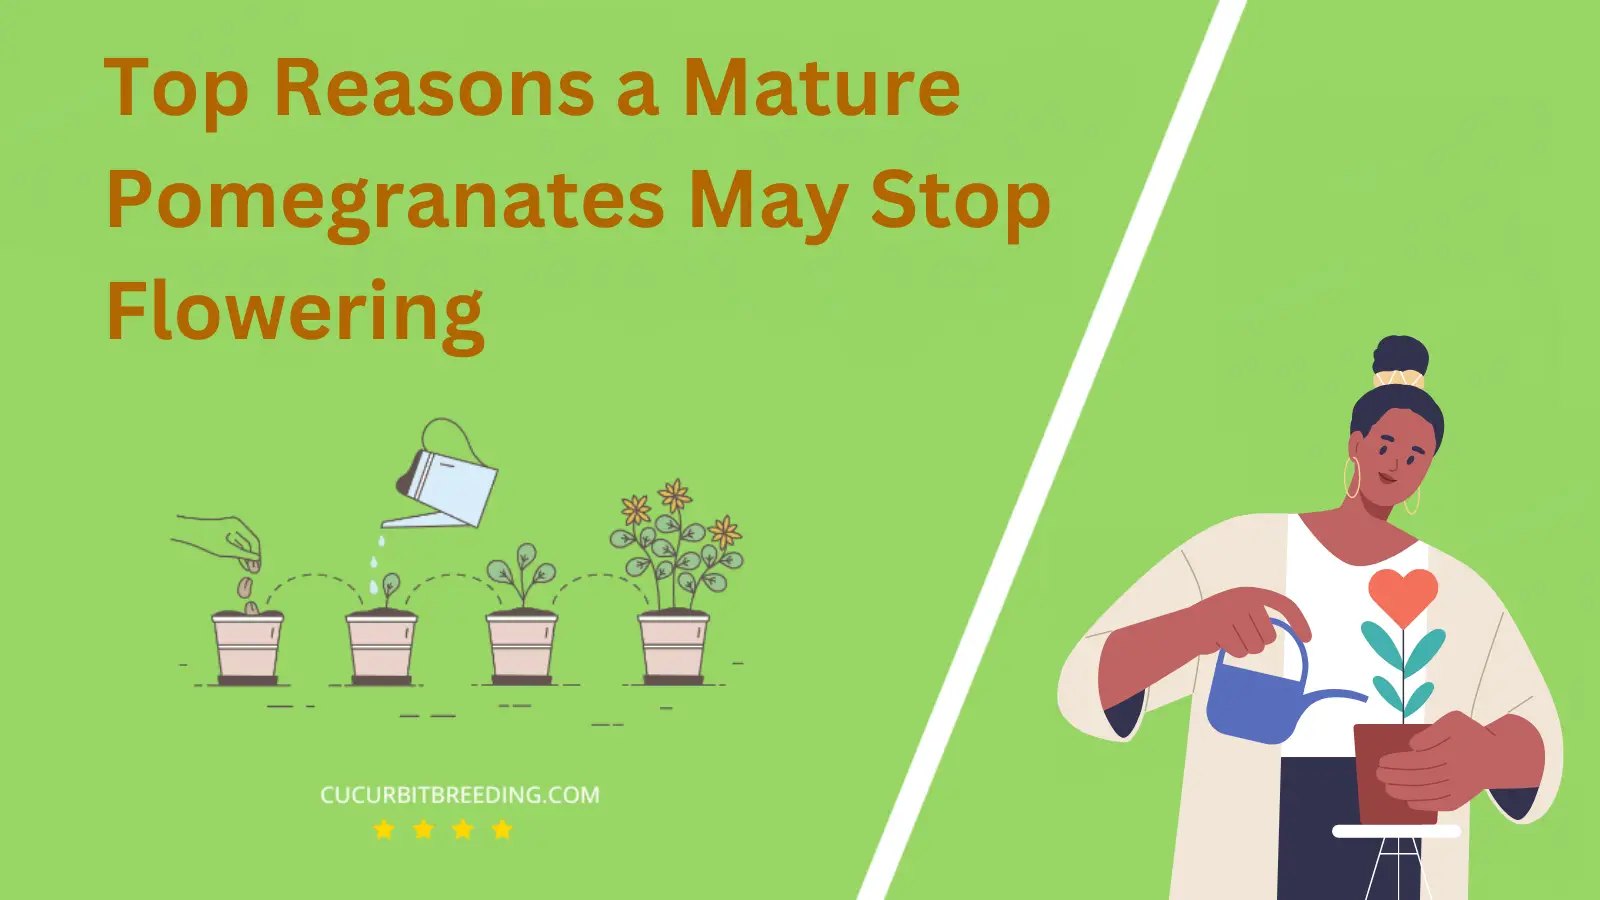 Top Reasons a Mature Pomegranates May Stop Flowering